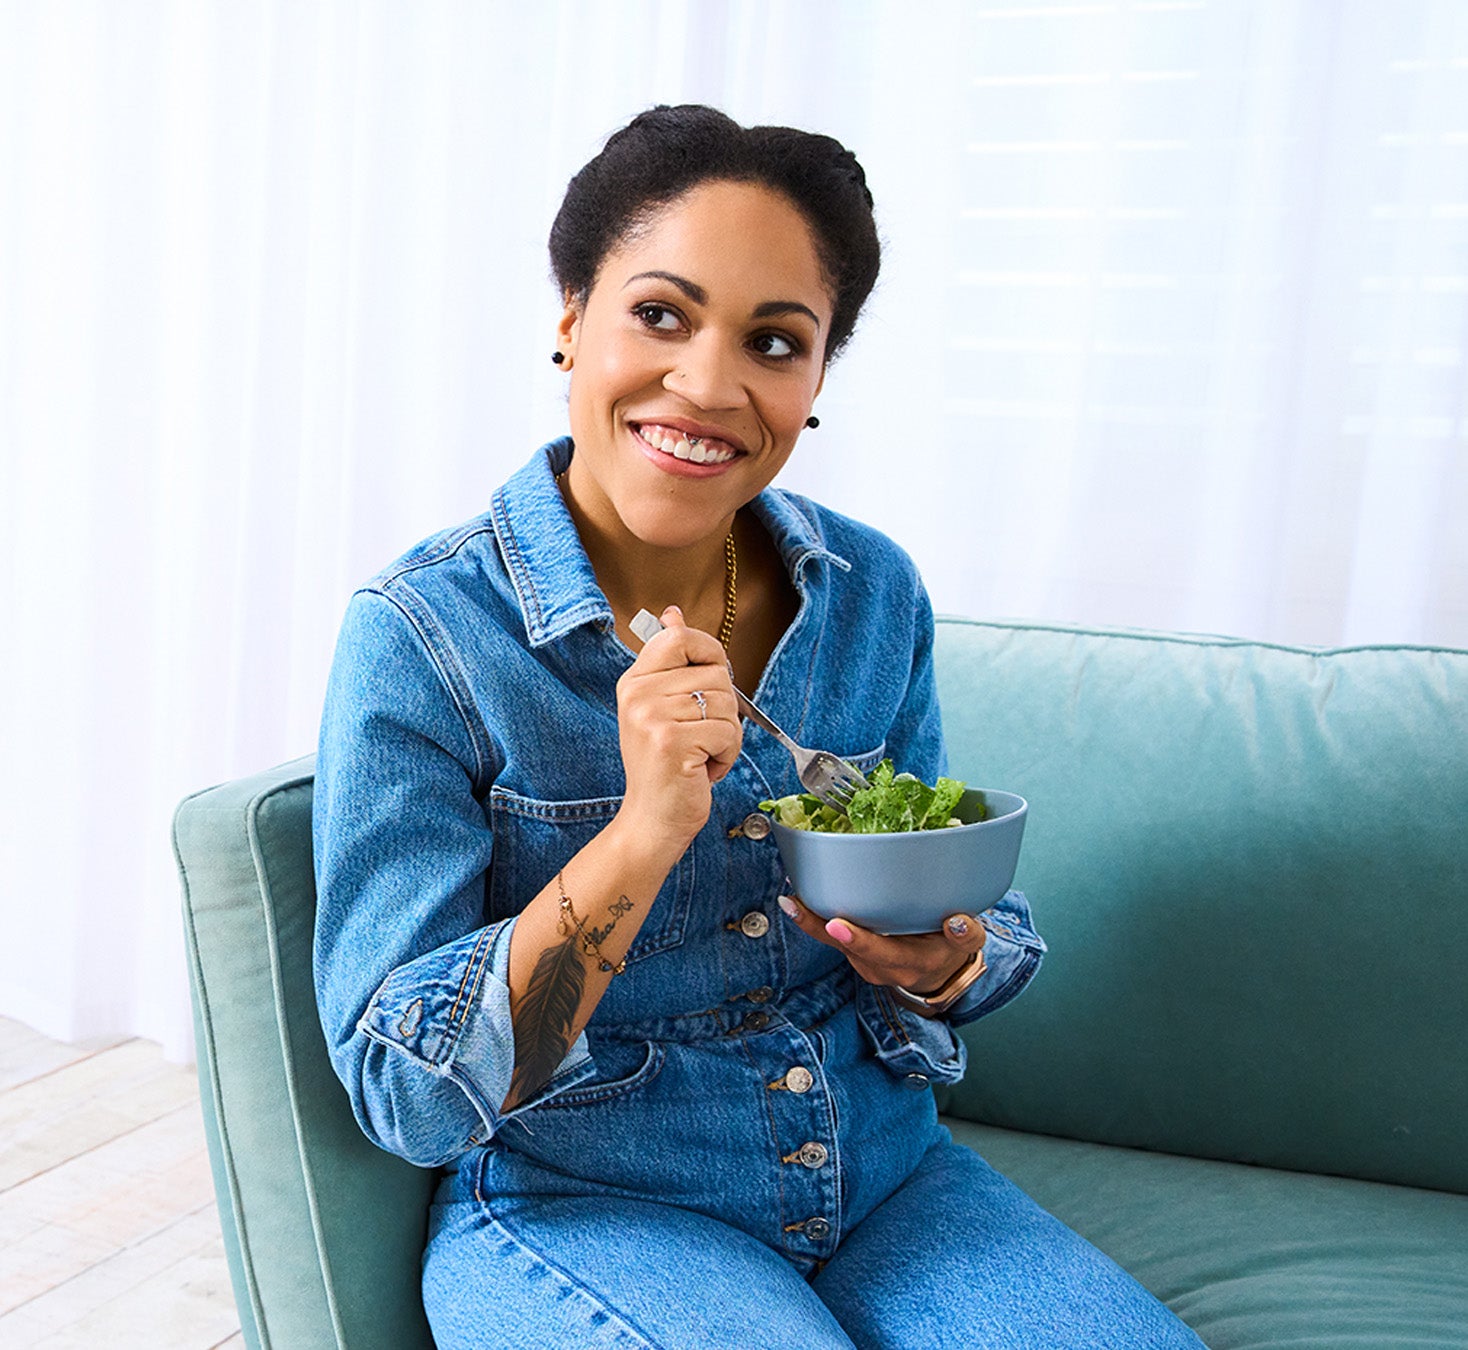 Une jeune femme en jean mange une salade